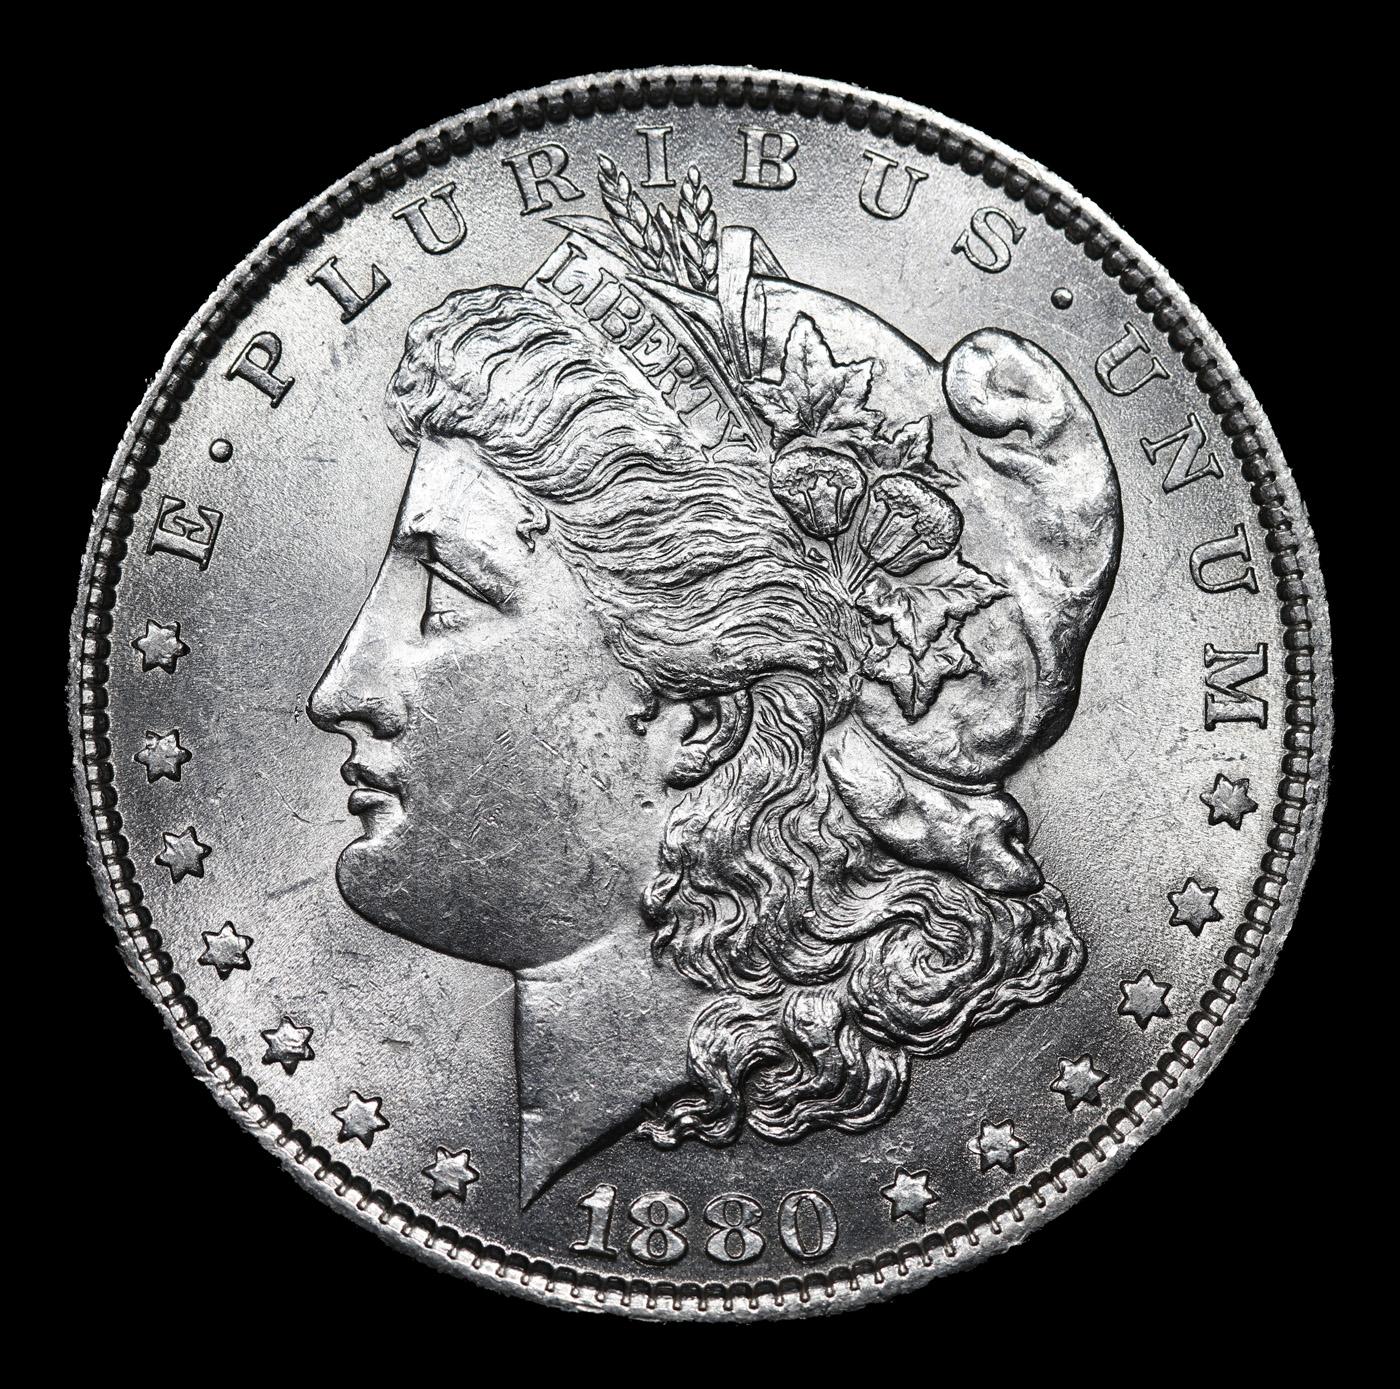 1880-p Morgan Dollar $1 Grades Choice Unc